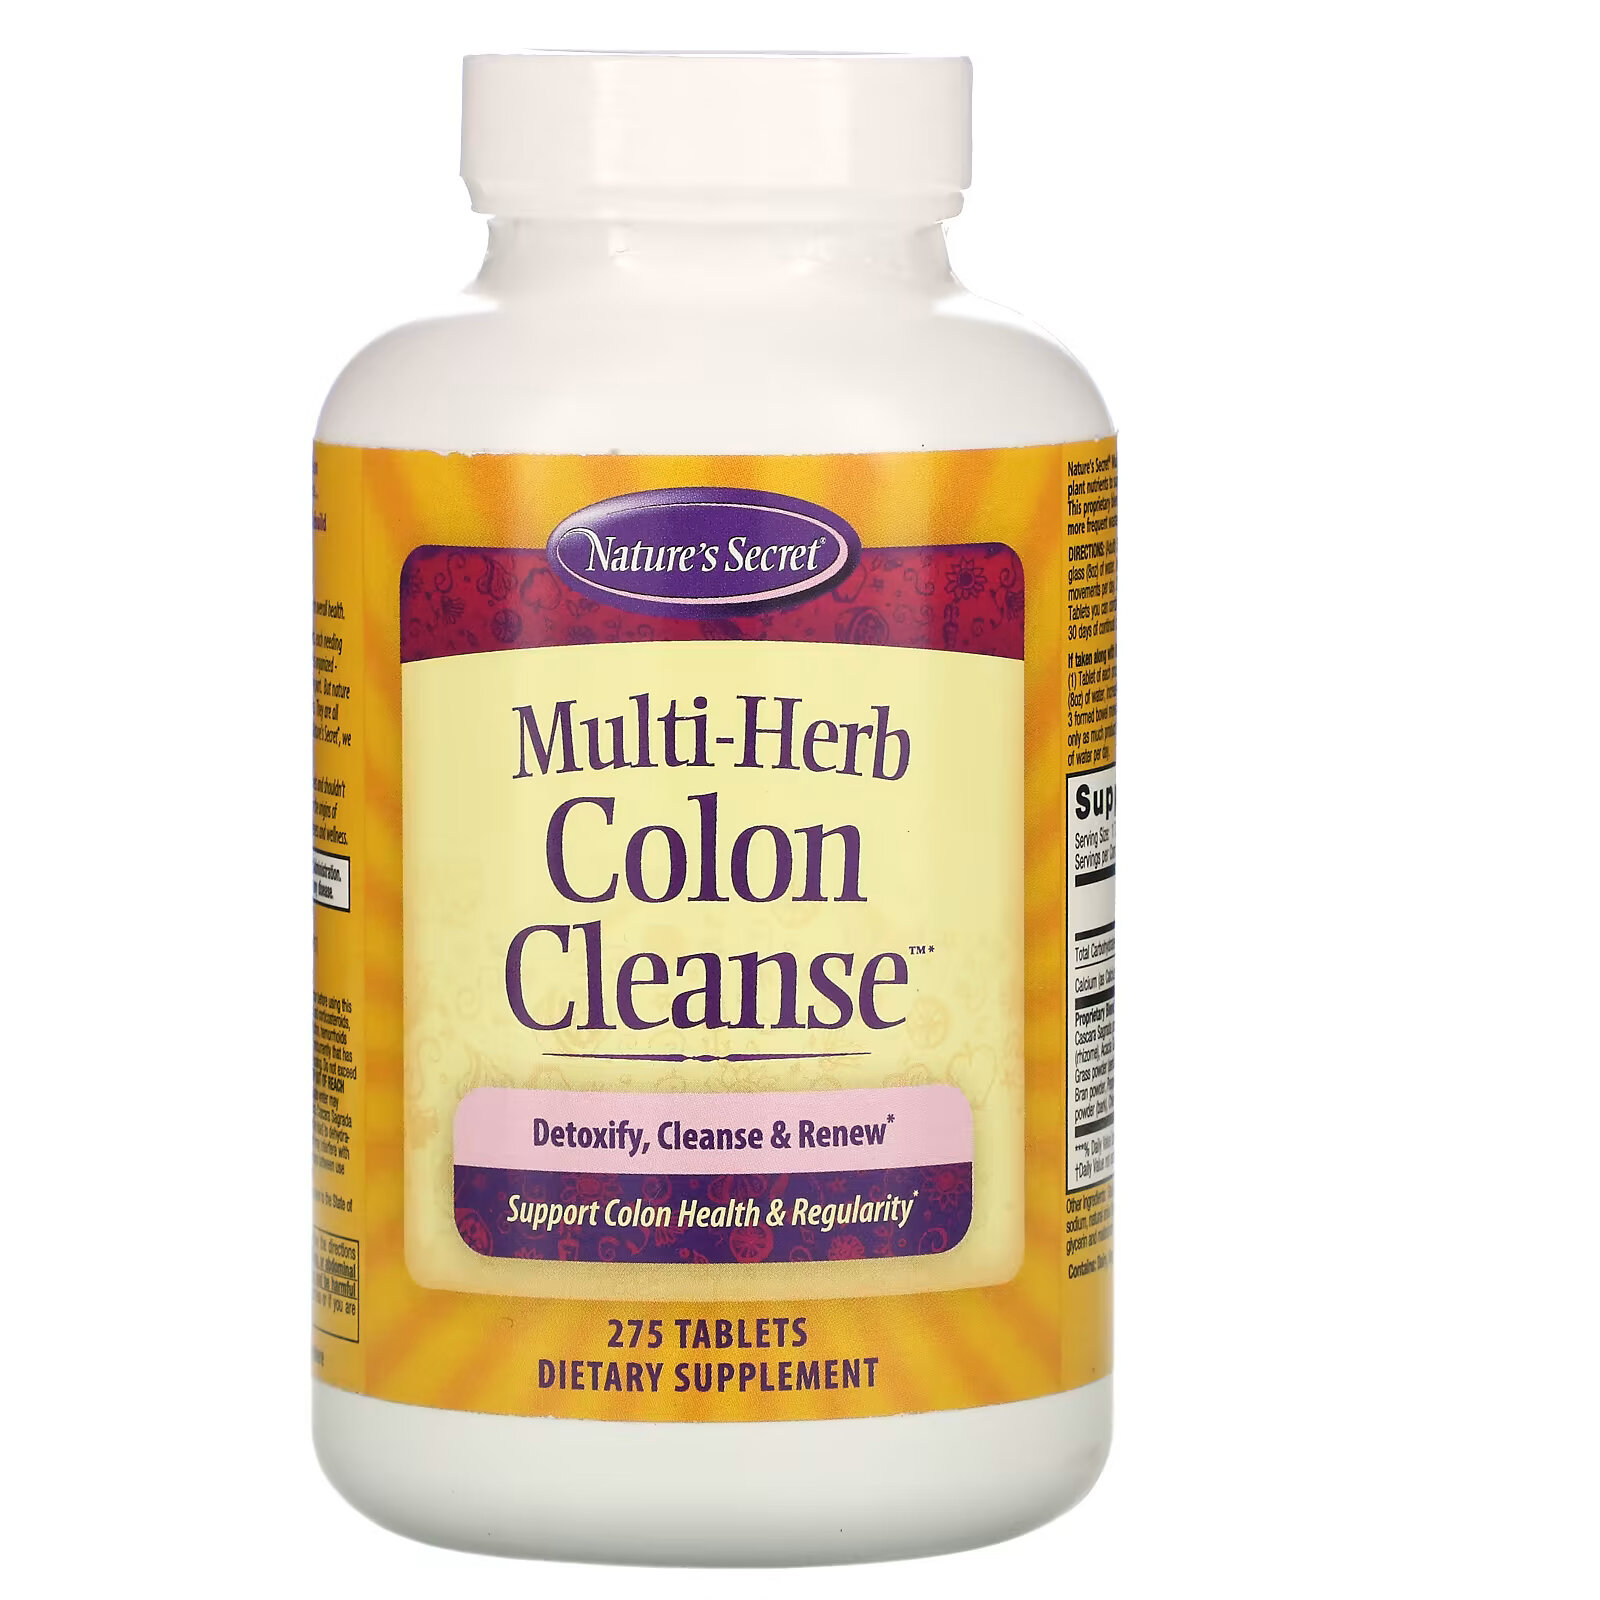 Nature's Secret, Multi-Herb Colon Cleanse, 275 таблеток цена и фото